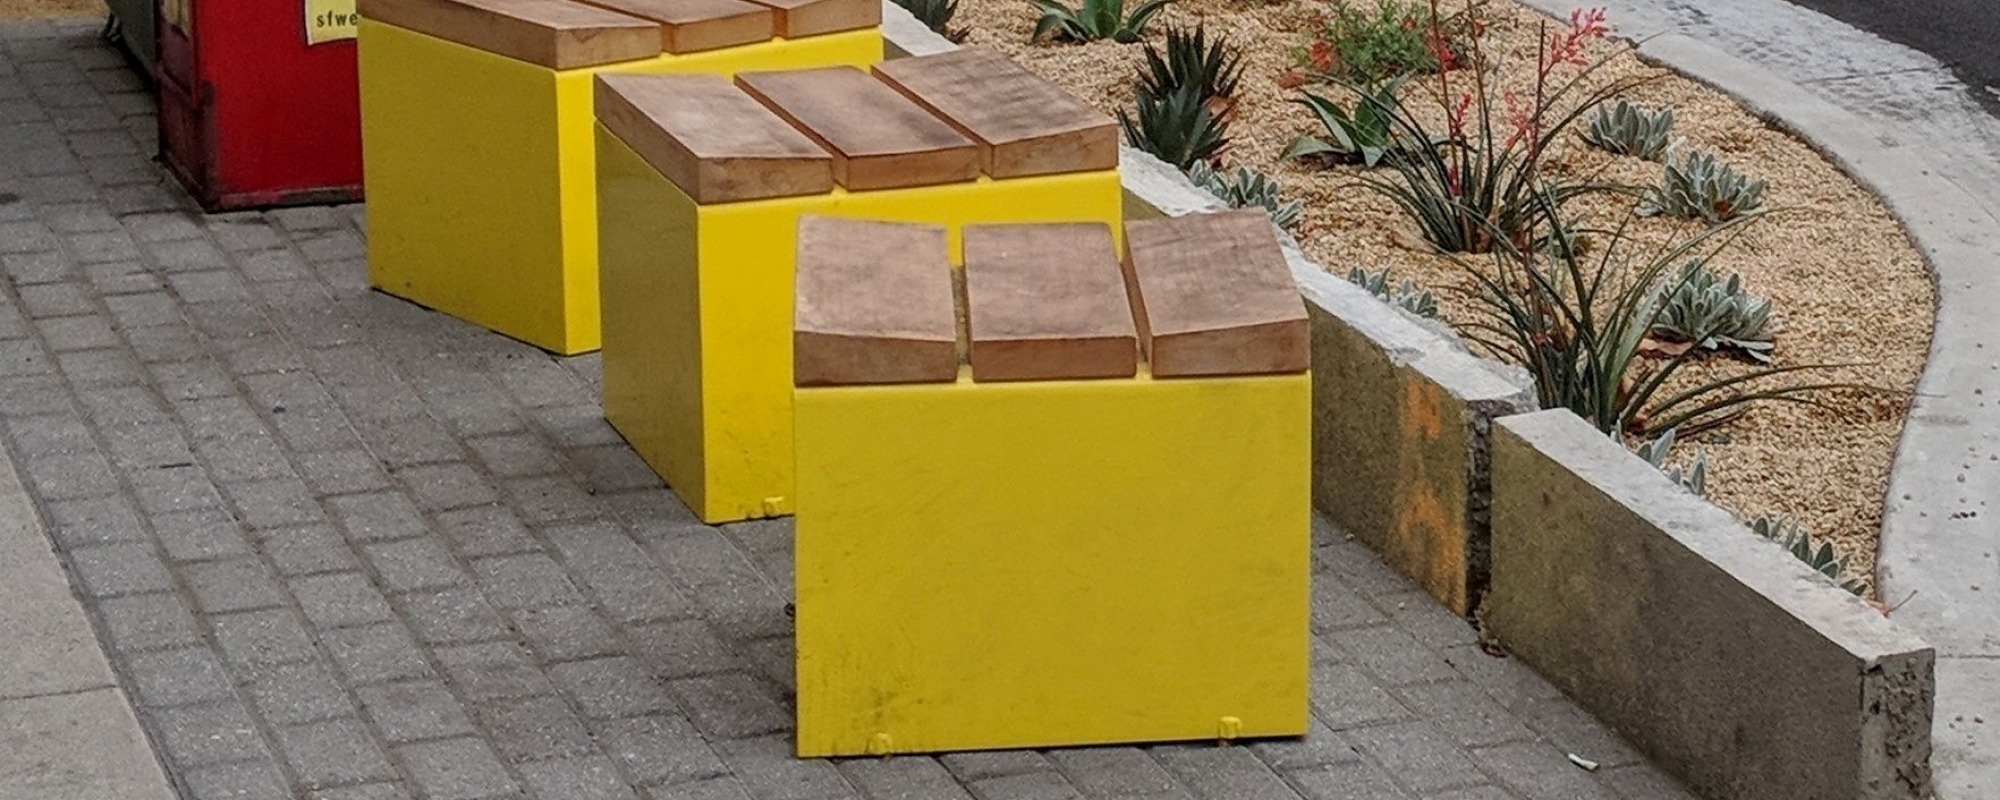 sidewalk bench